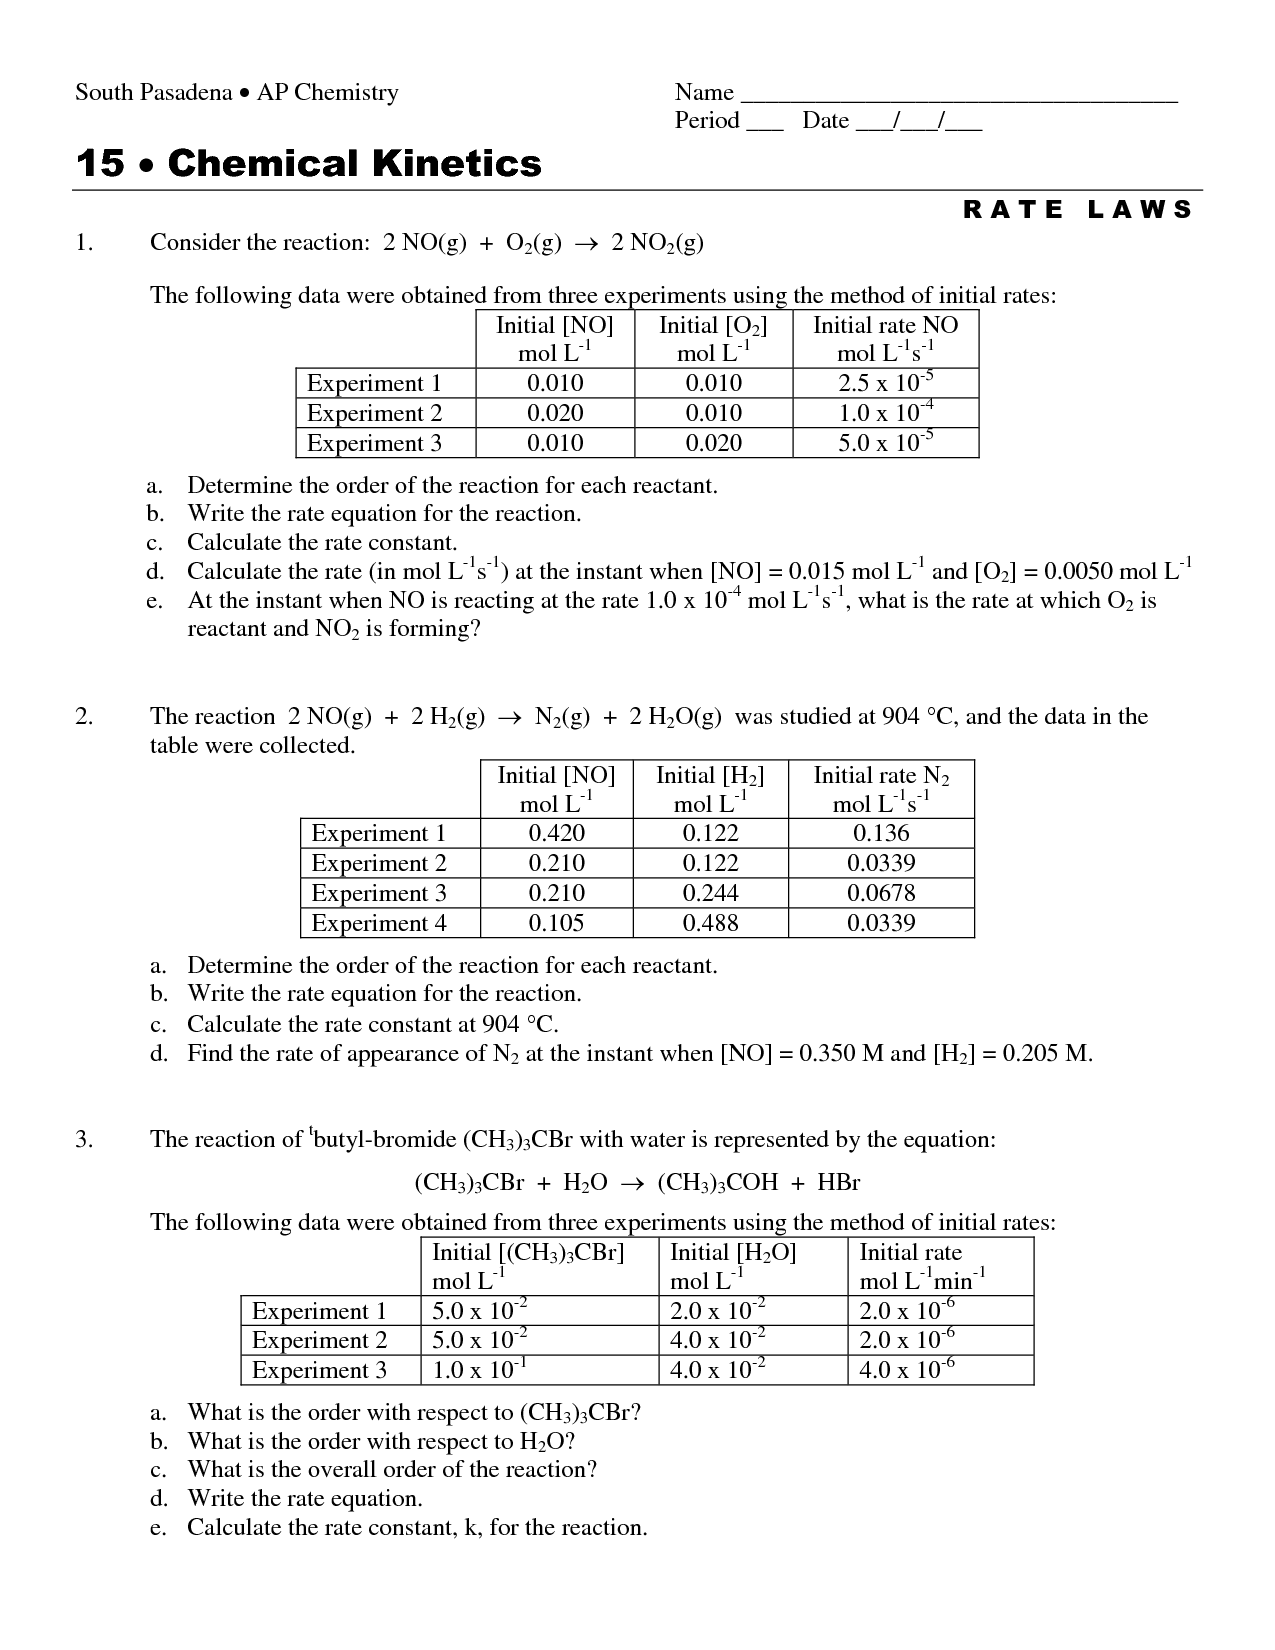 AP Chemistry Kinetics Worksheet Image